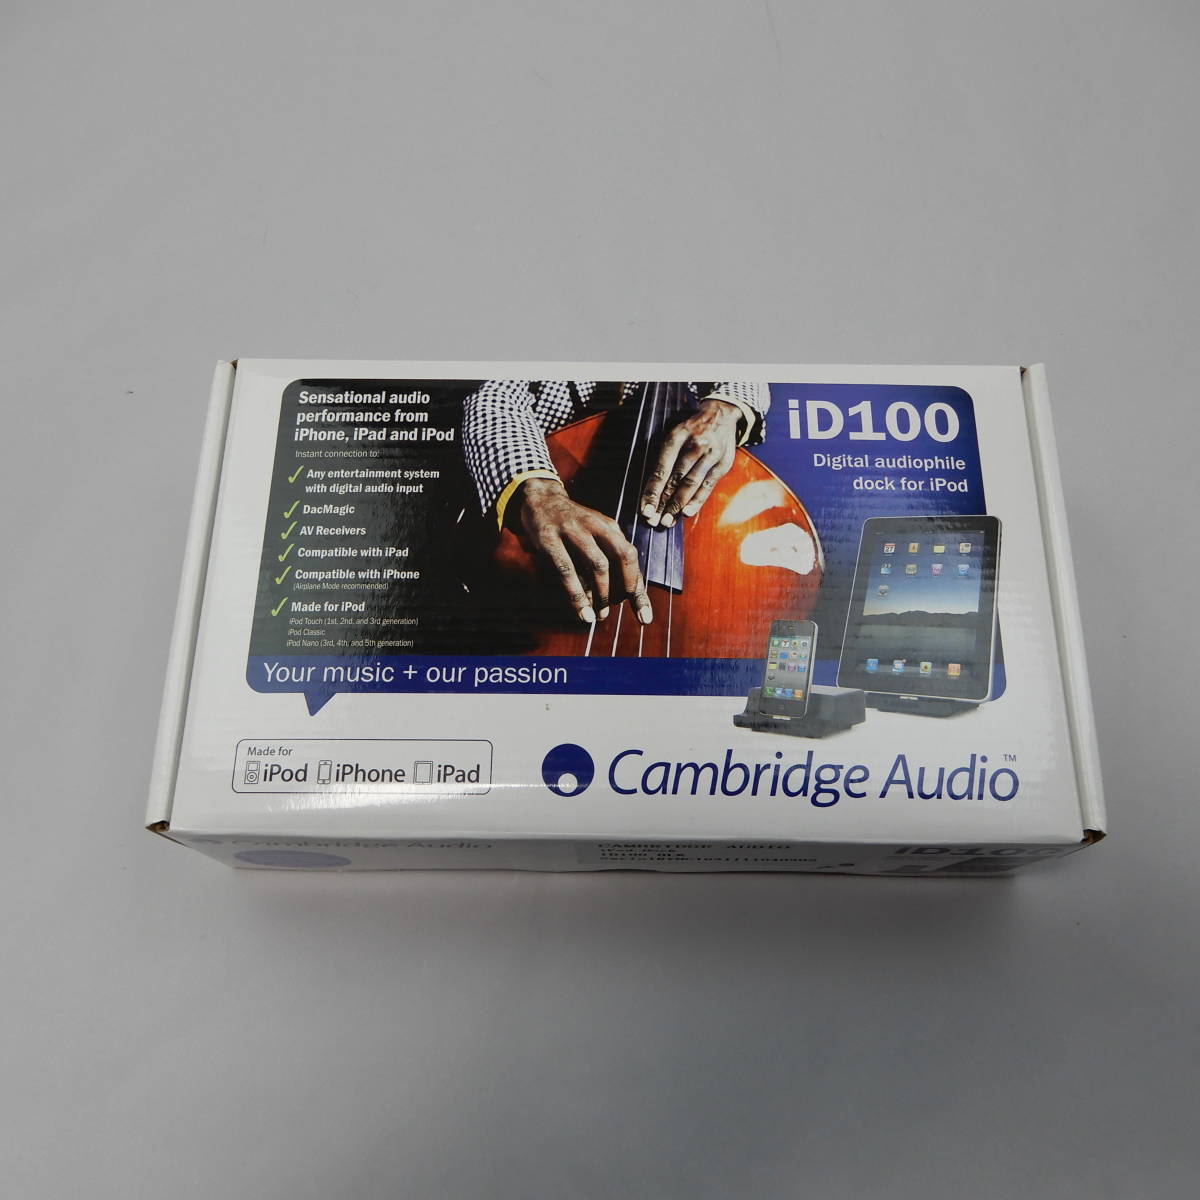 Cambridge Audio Cambridge Audio / iD 100數字iPod基座，數字傳輸 原文:Cambridge Audio ケンブリッジ オーディオ / iD100 デジタルiPod Dock, デジタルトランスポート